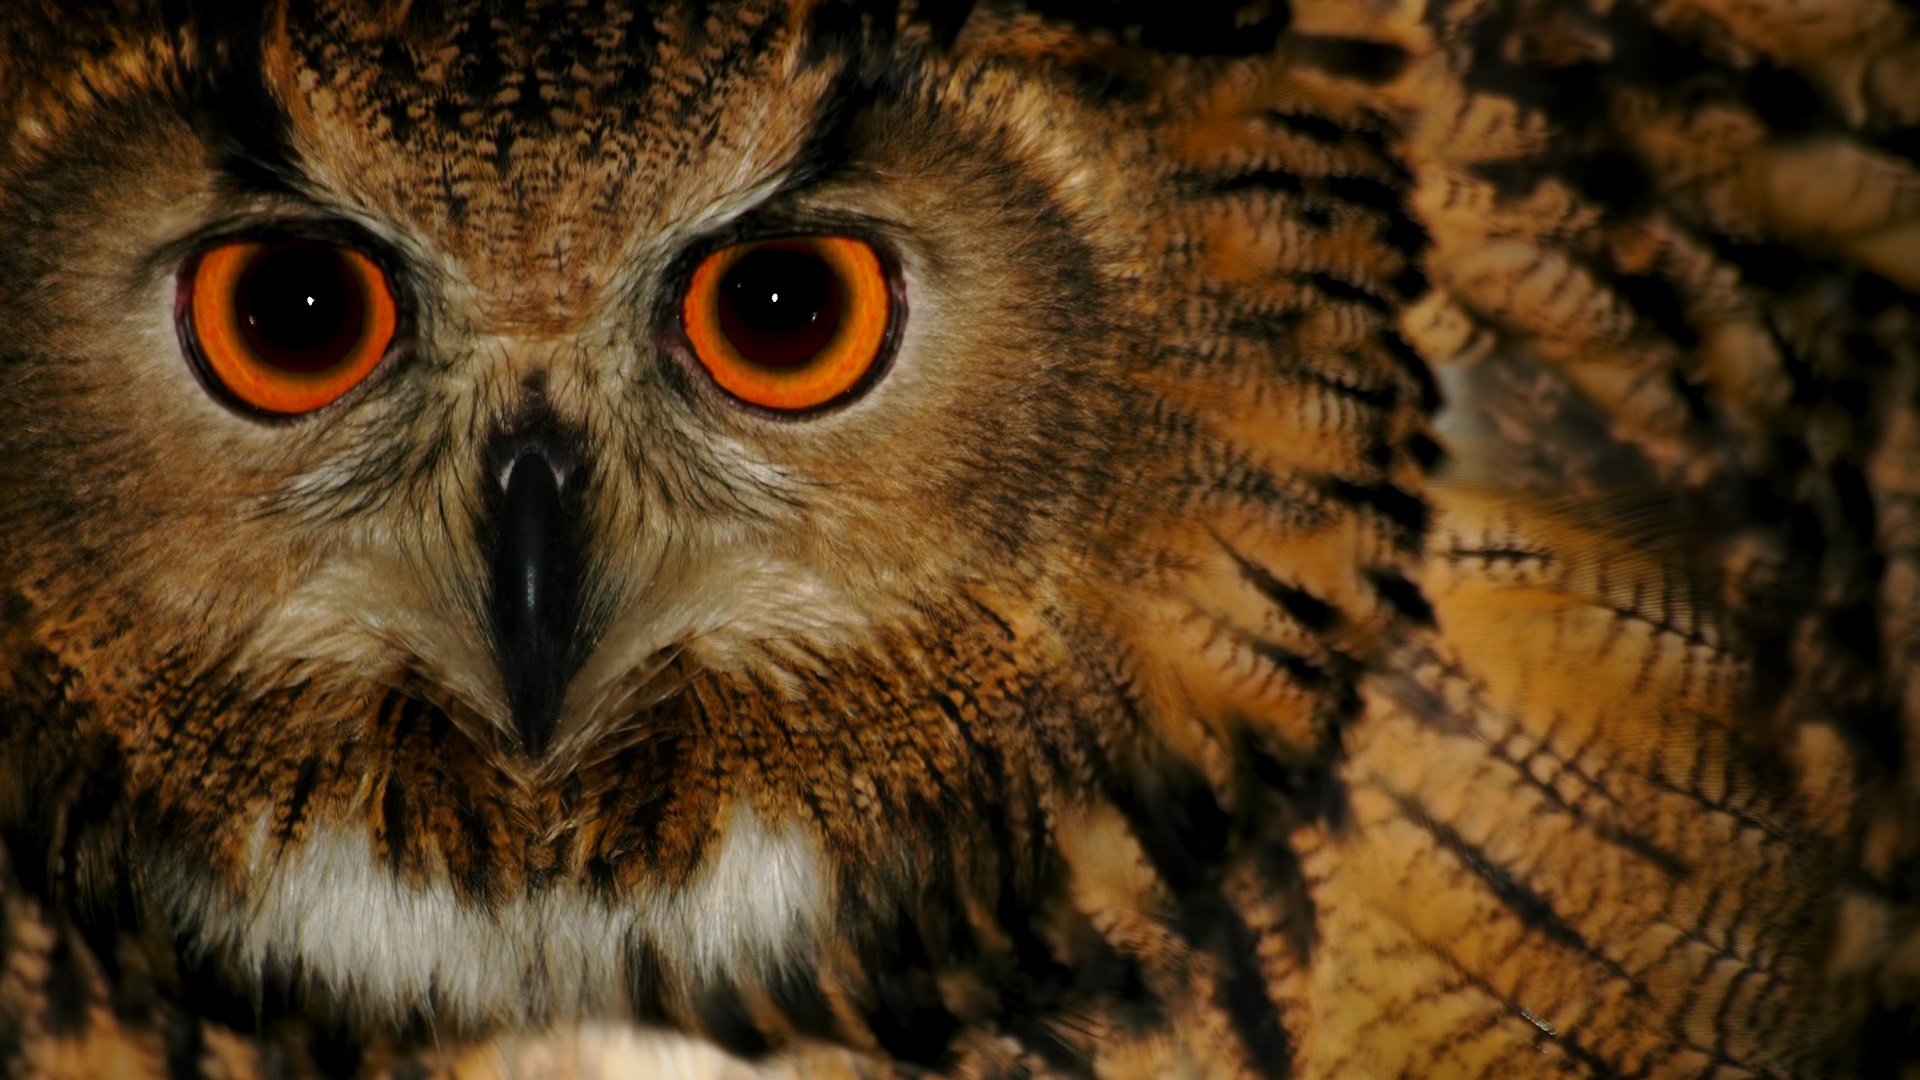 Cute Owl Photo.